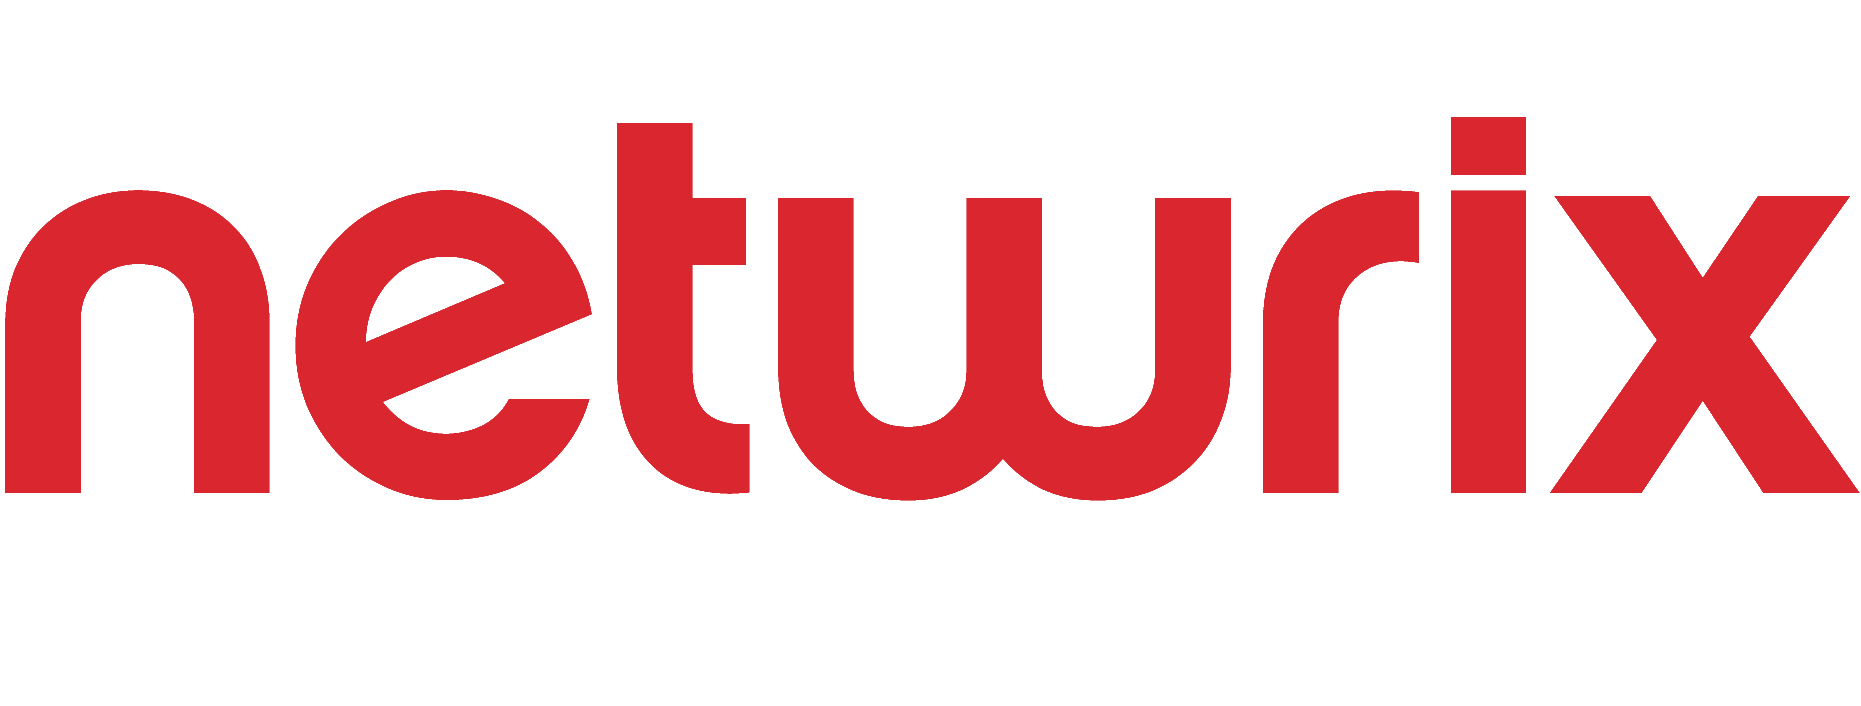 Netwrix logo -no tagline.png